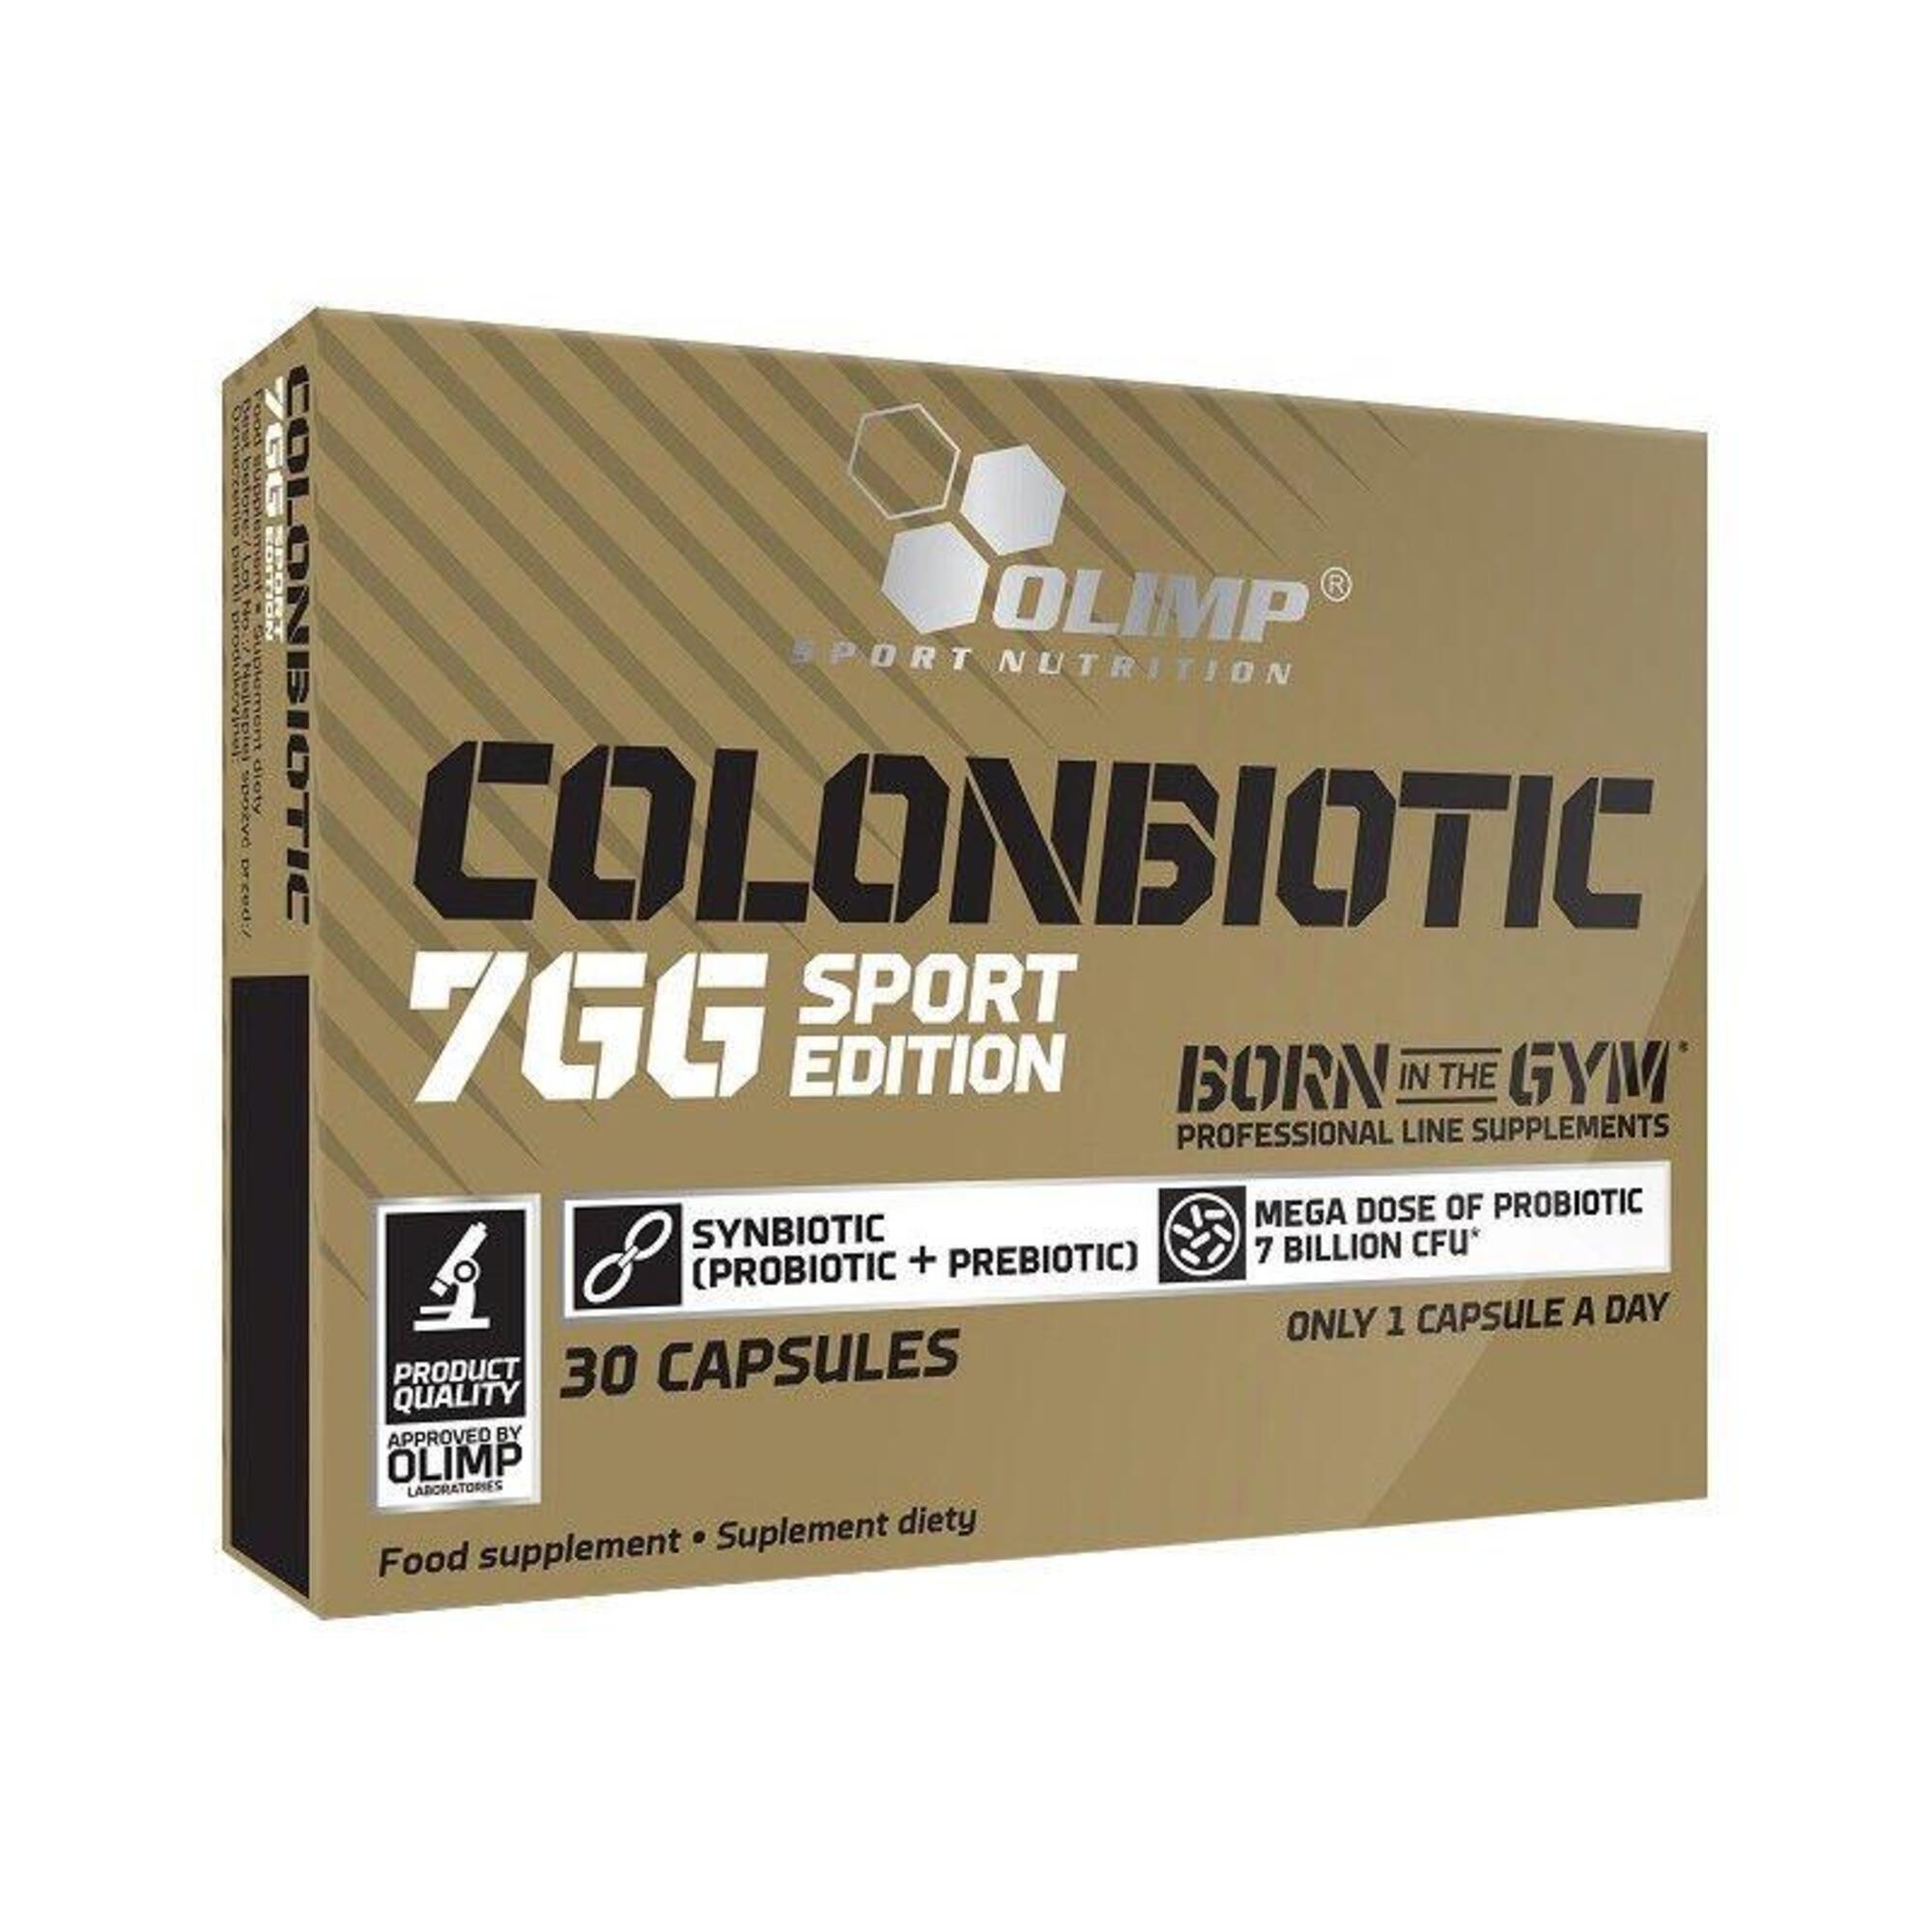 Colonbiotic 7GG Sport Edition OLIMP 30 kaps